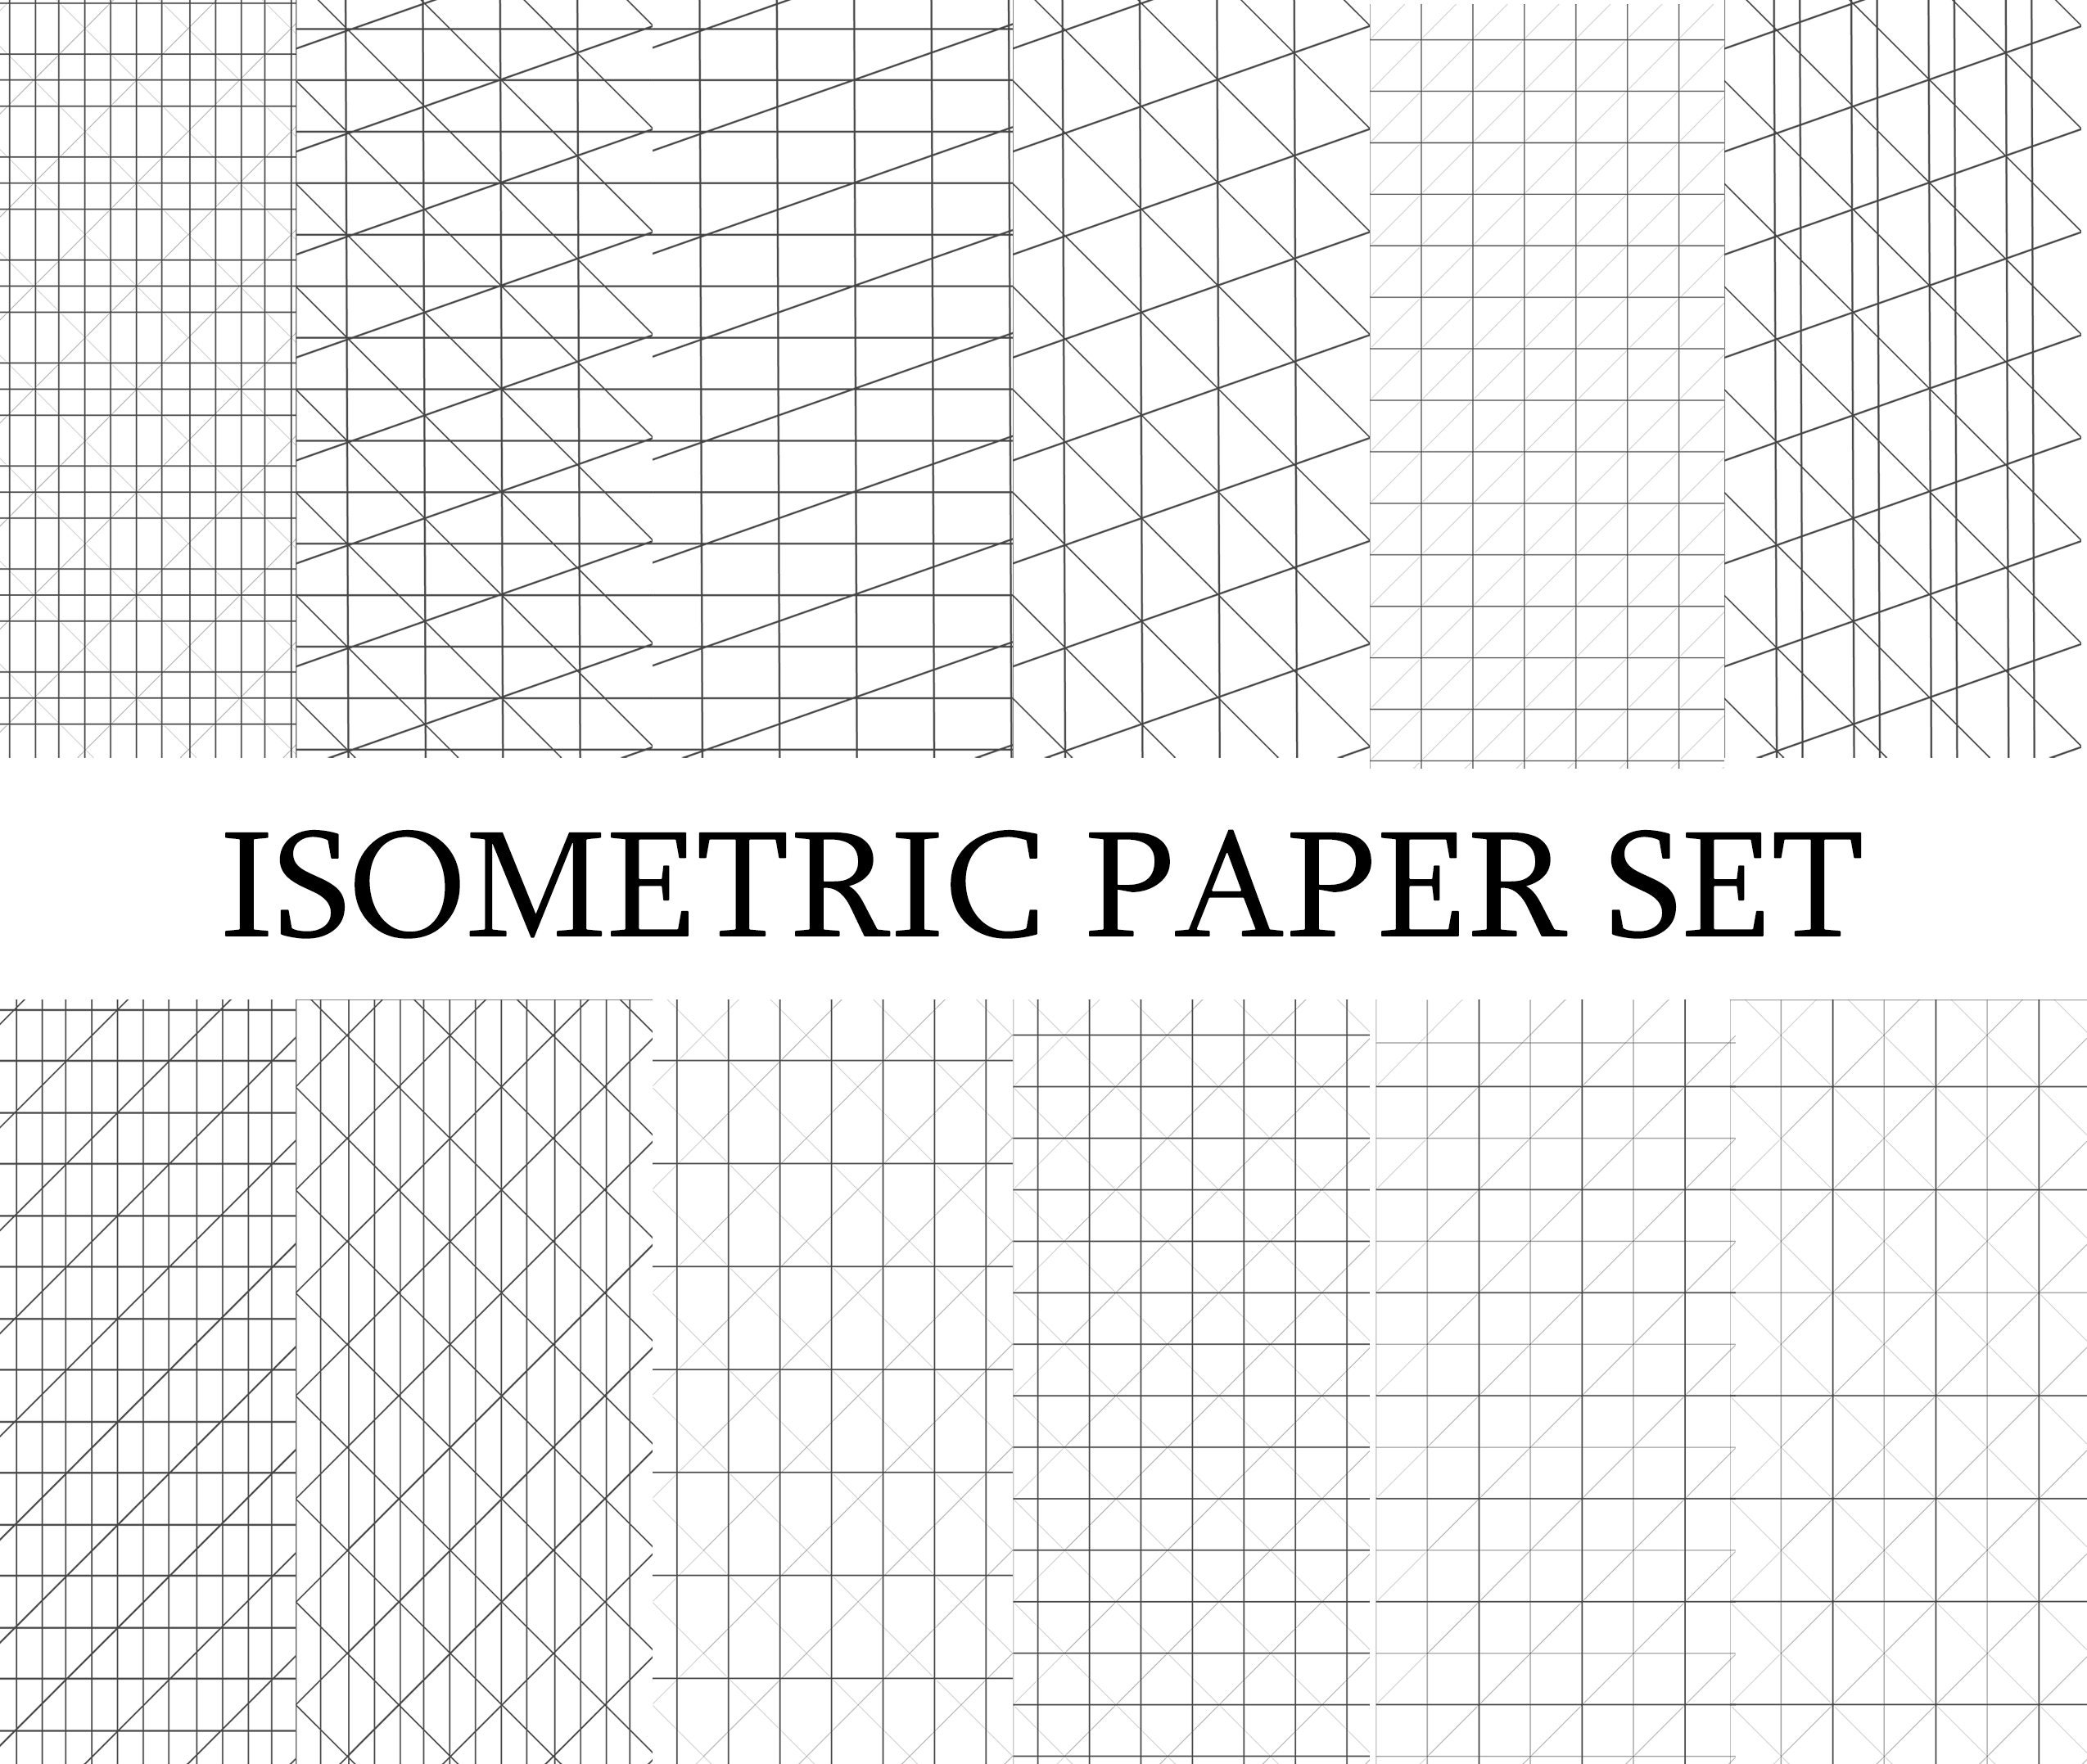 Isometric Grid Sketchbook: 6x 9 Isometric Sketchbook for Artists